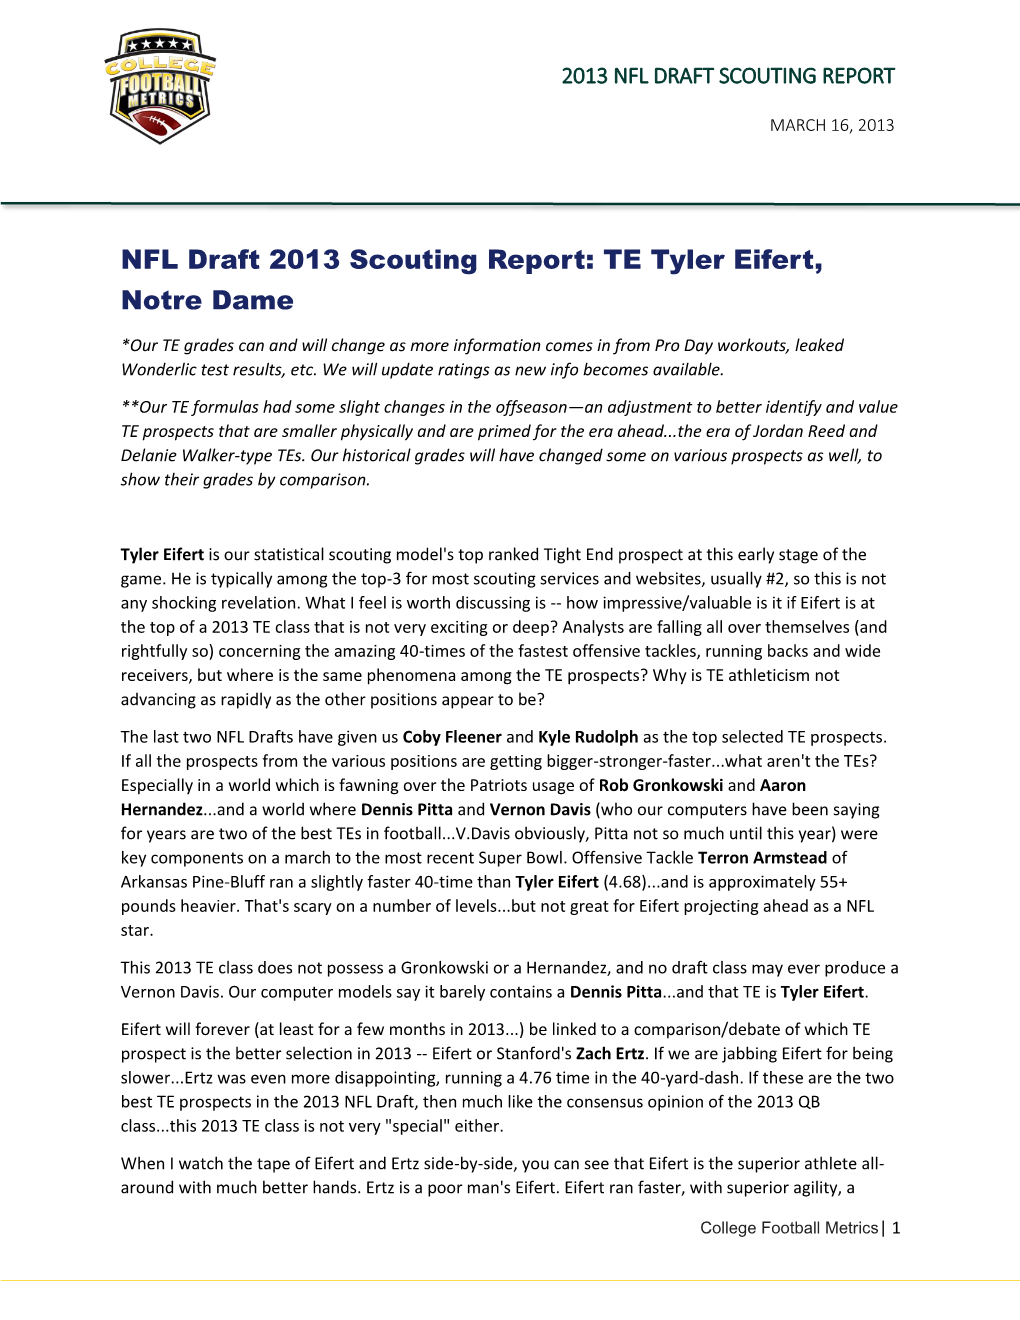 NFL Draft 2013 Scouting Report: TE Tyler Eifert, Notre Dame